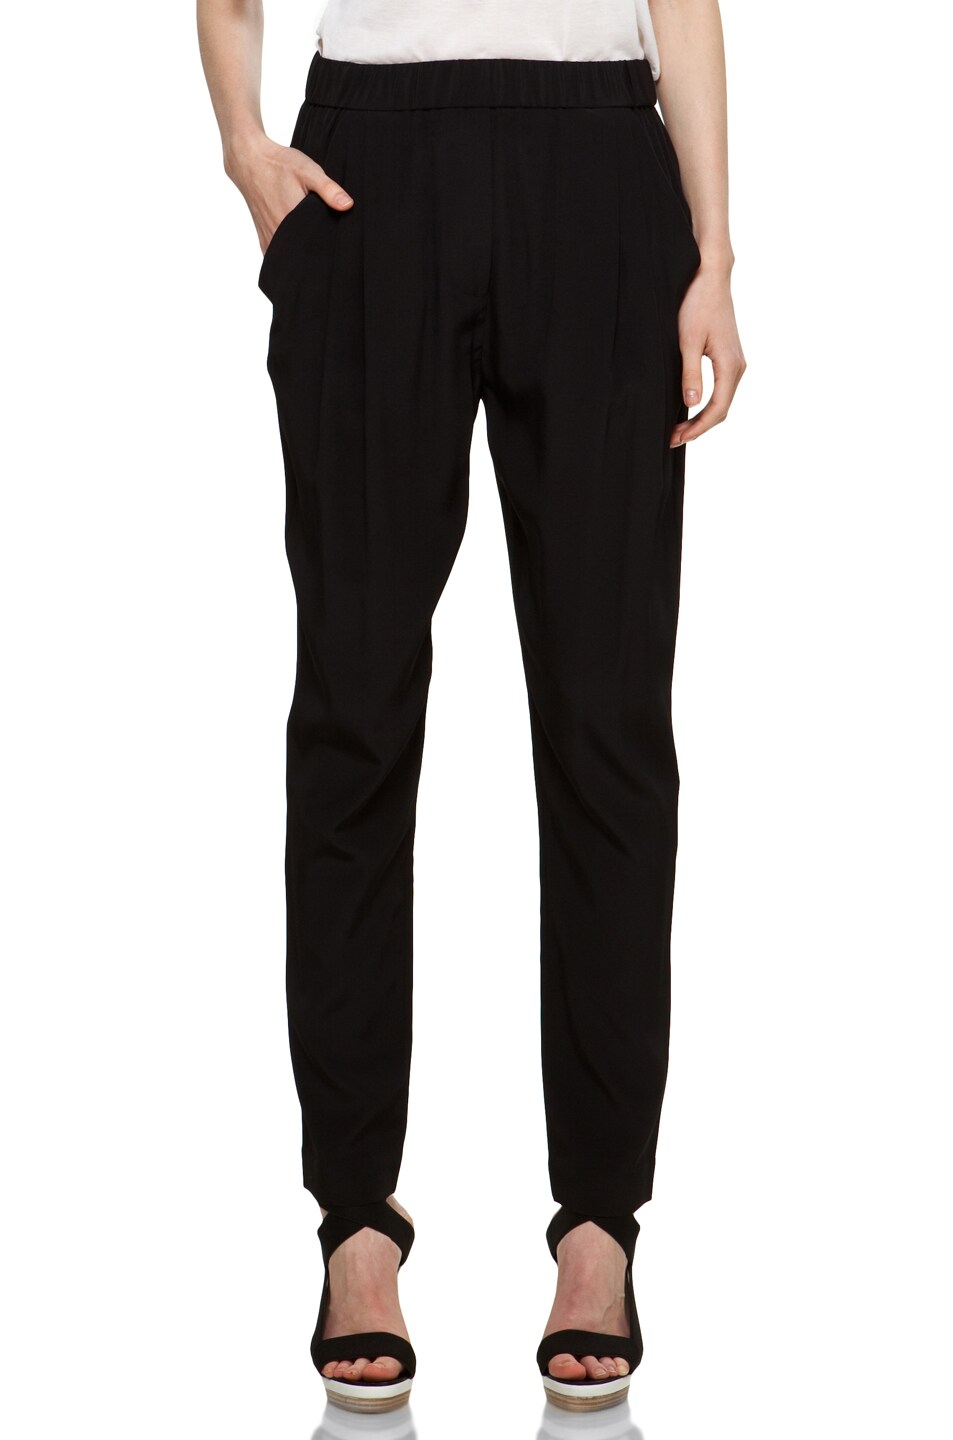 3.1 phillip lim Draped Pocket Silk Trouser in Black | FWRD